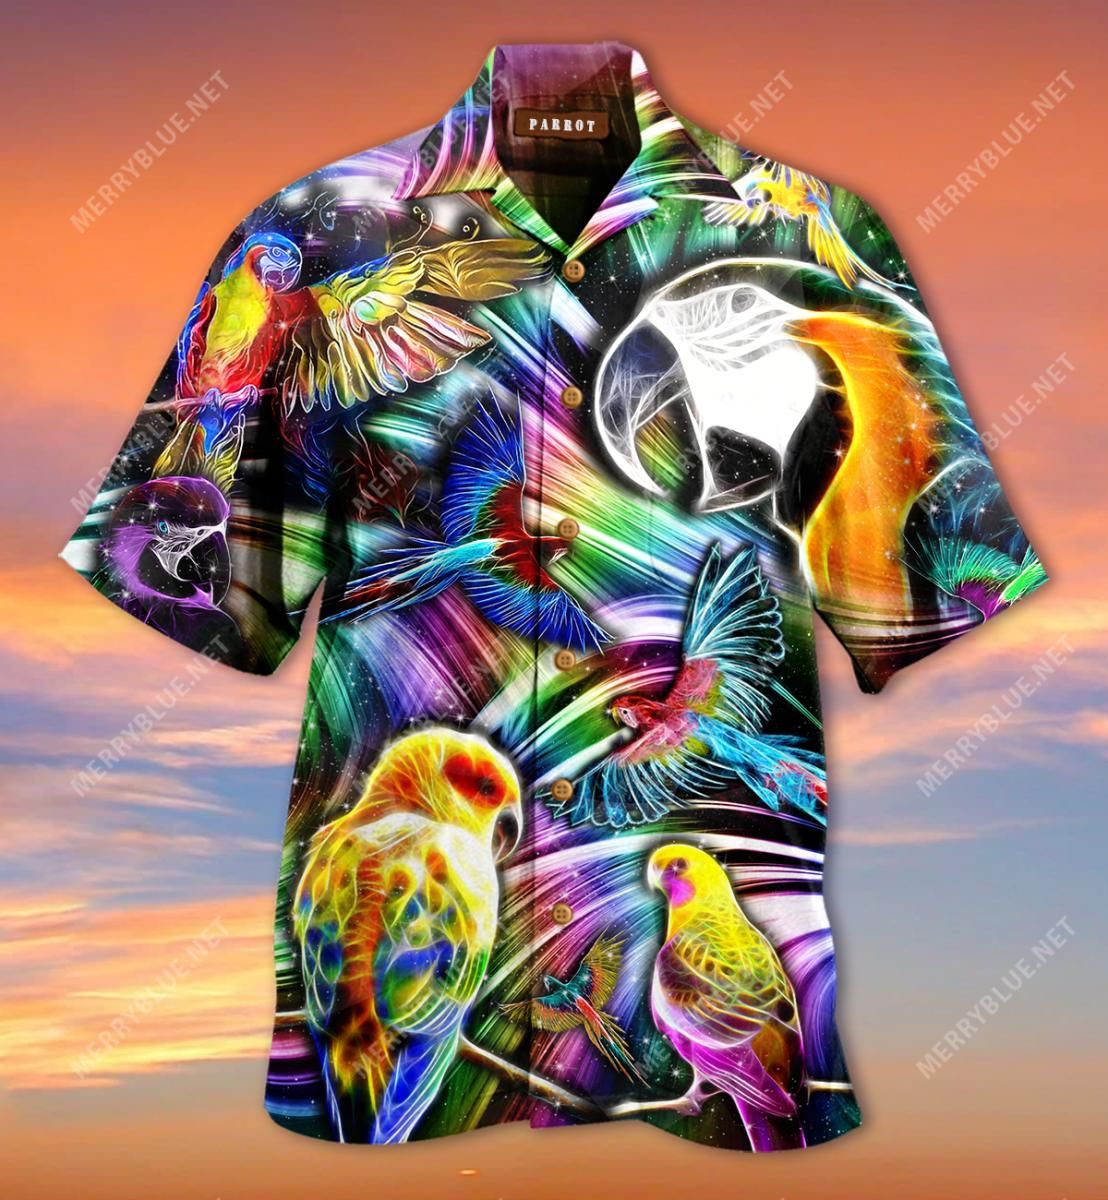 Amazing Parrot Aloha Hawaiian Shirt Colorful Short Sleeve Summer Beach Casual Shirt For Men And Women